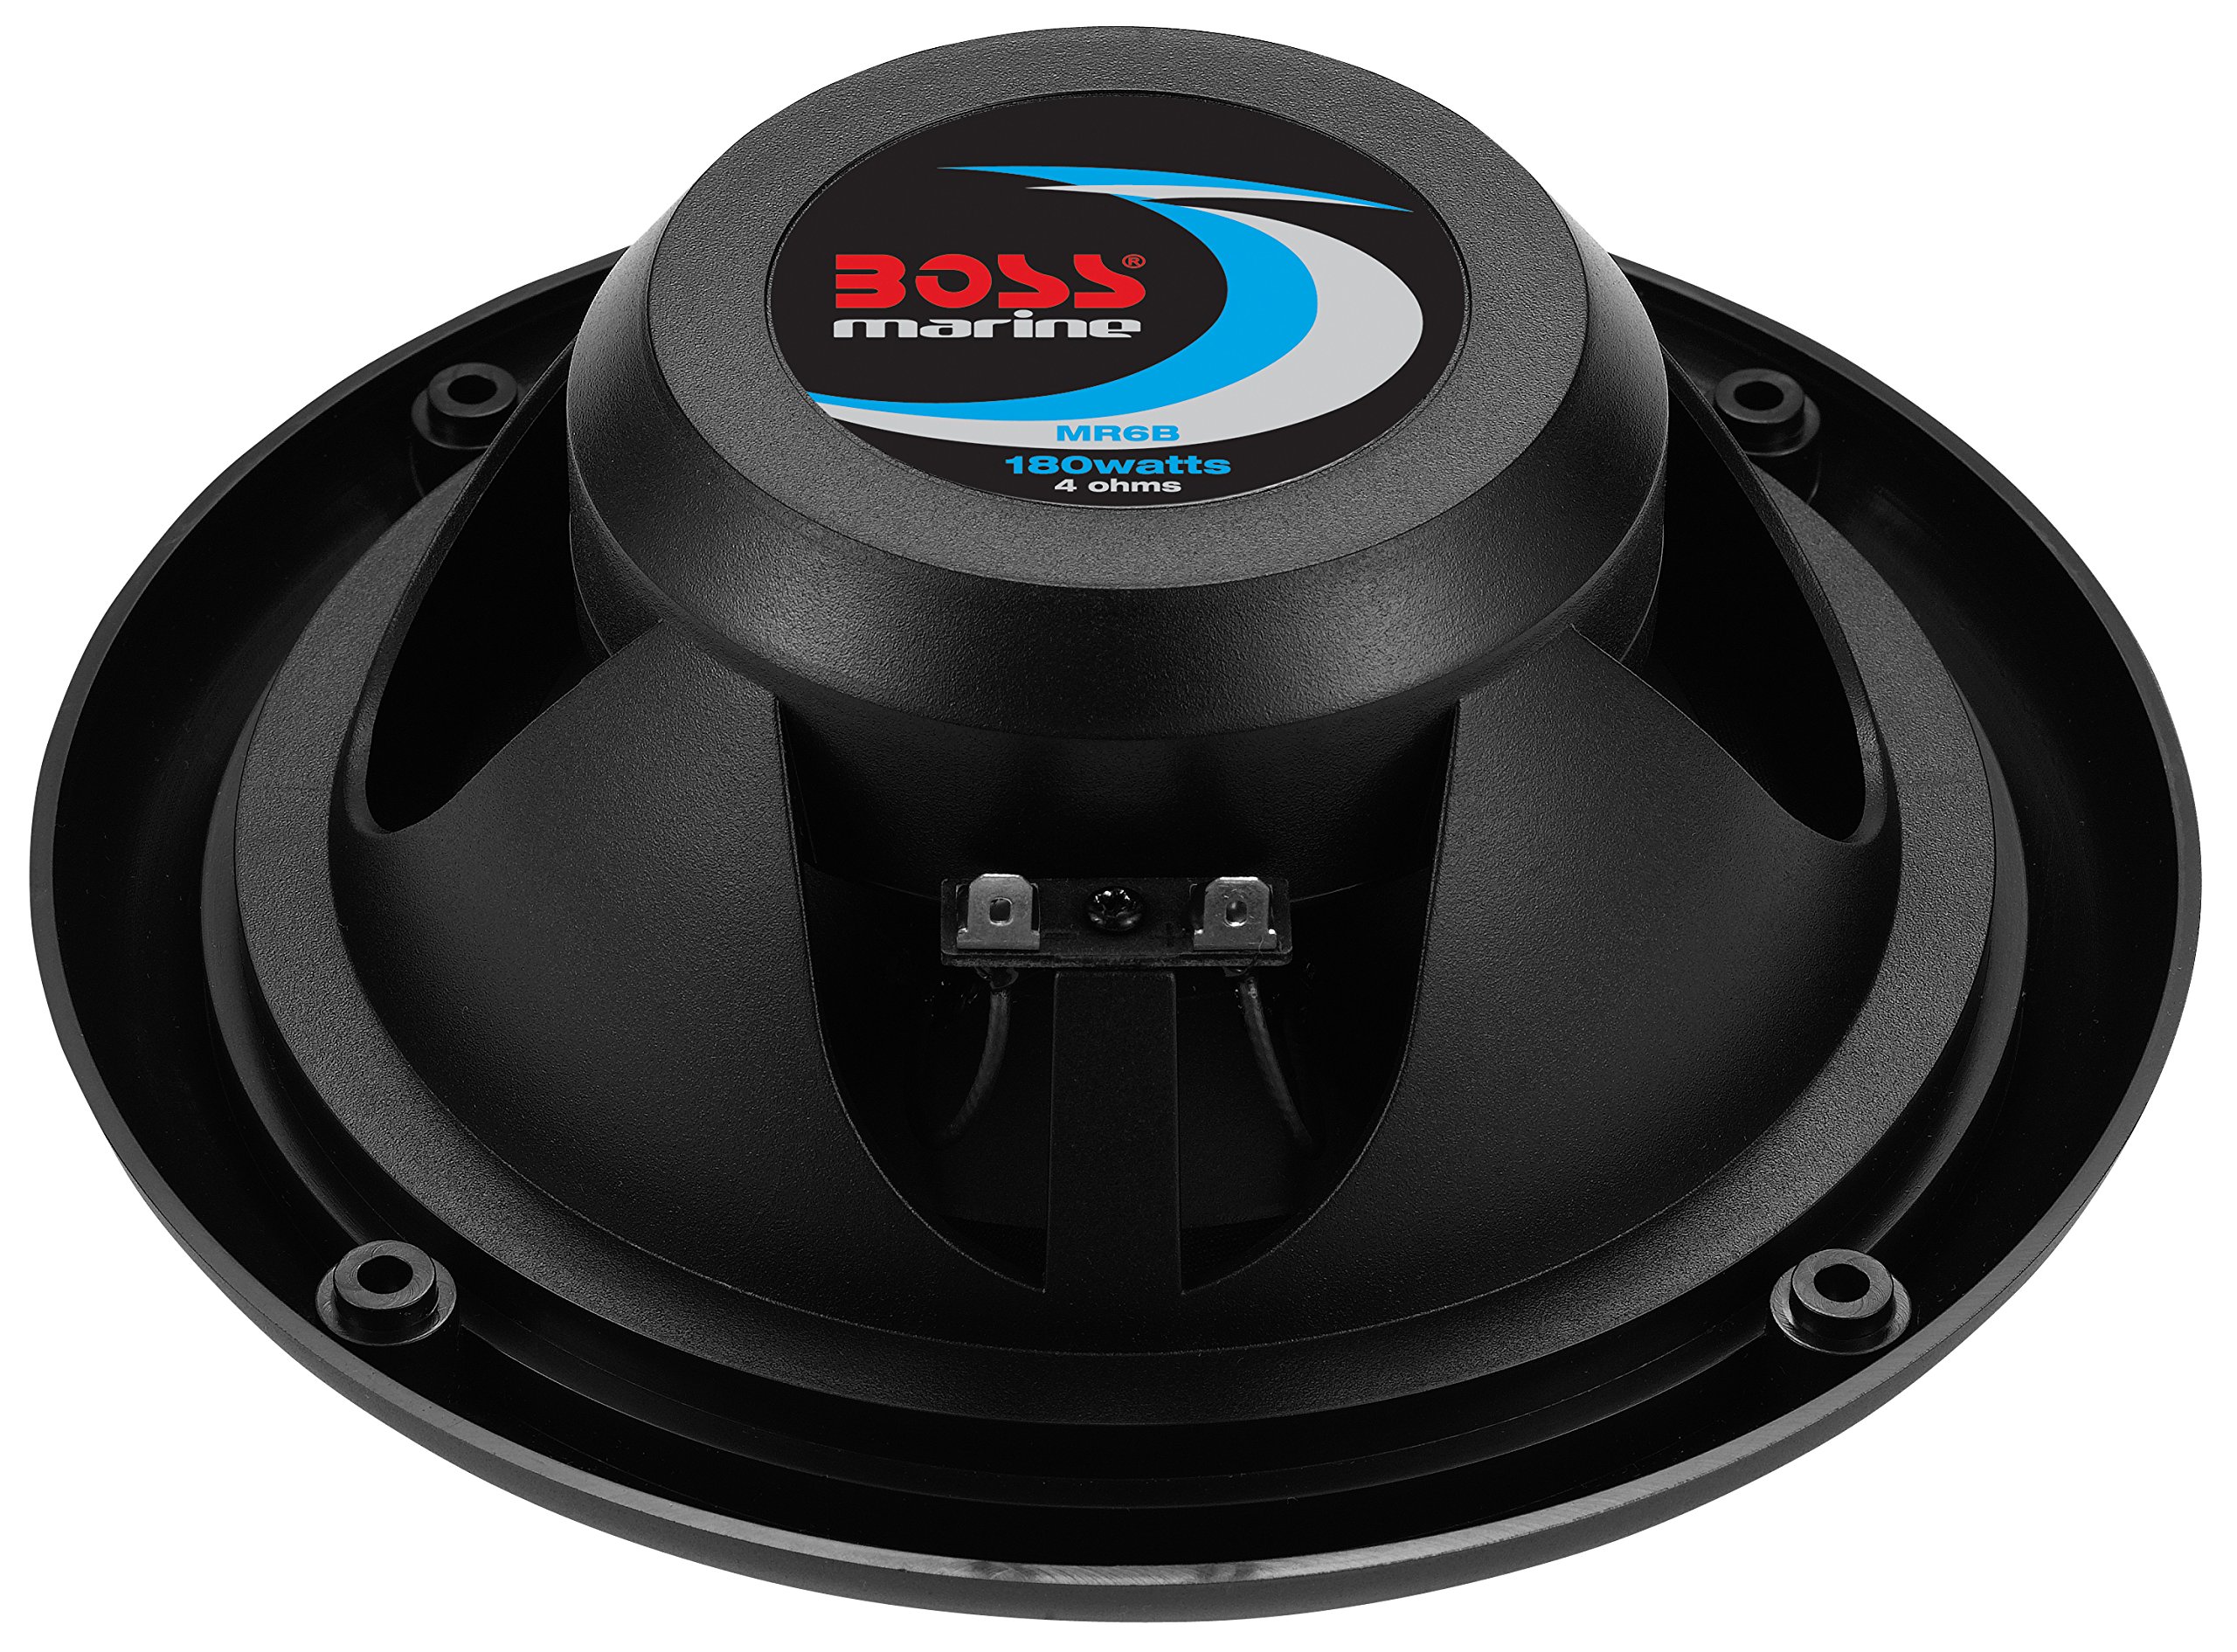 BOSS Audio Systems MR6B 6.5 inch Marine Stereo Boat Speakers - 180 Watts (pair), 2 Way, Full Range, Tweeters, Coaxial, Weatherproof, Sold in Pairs